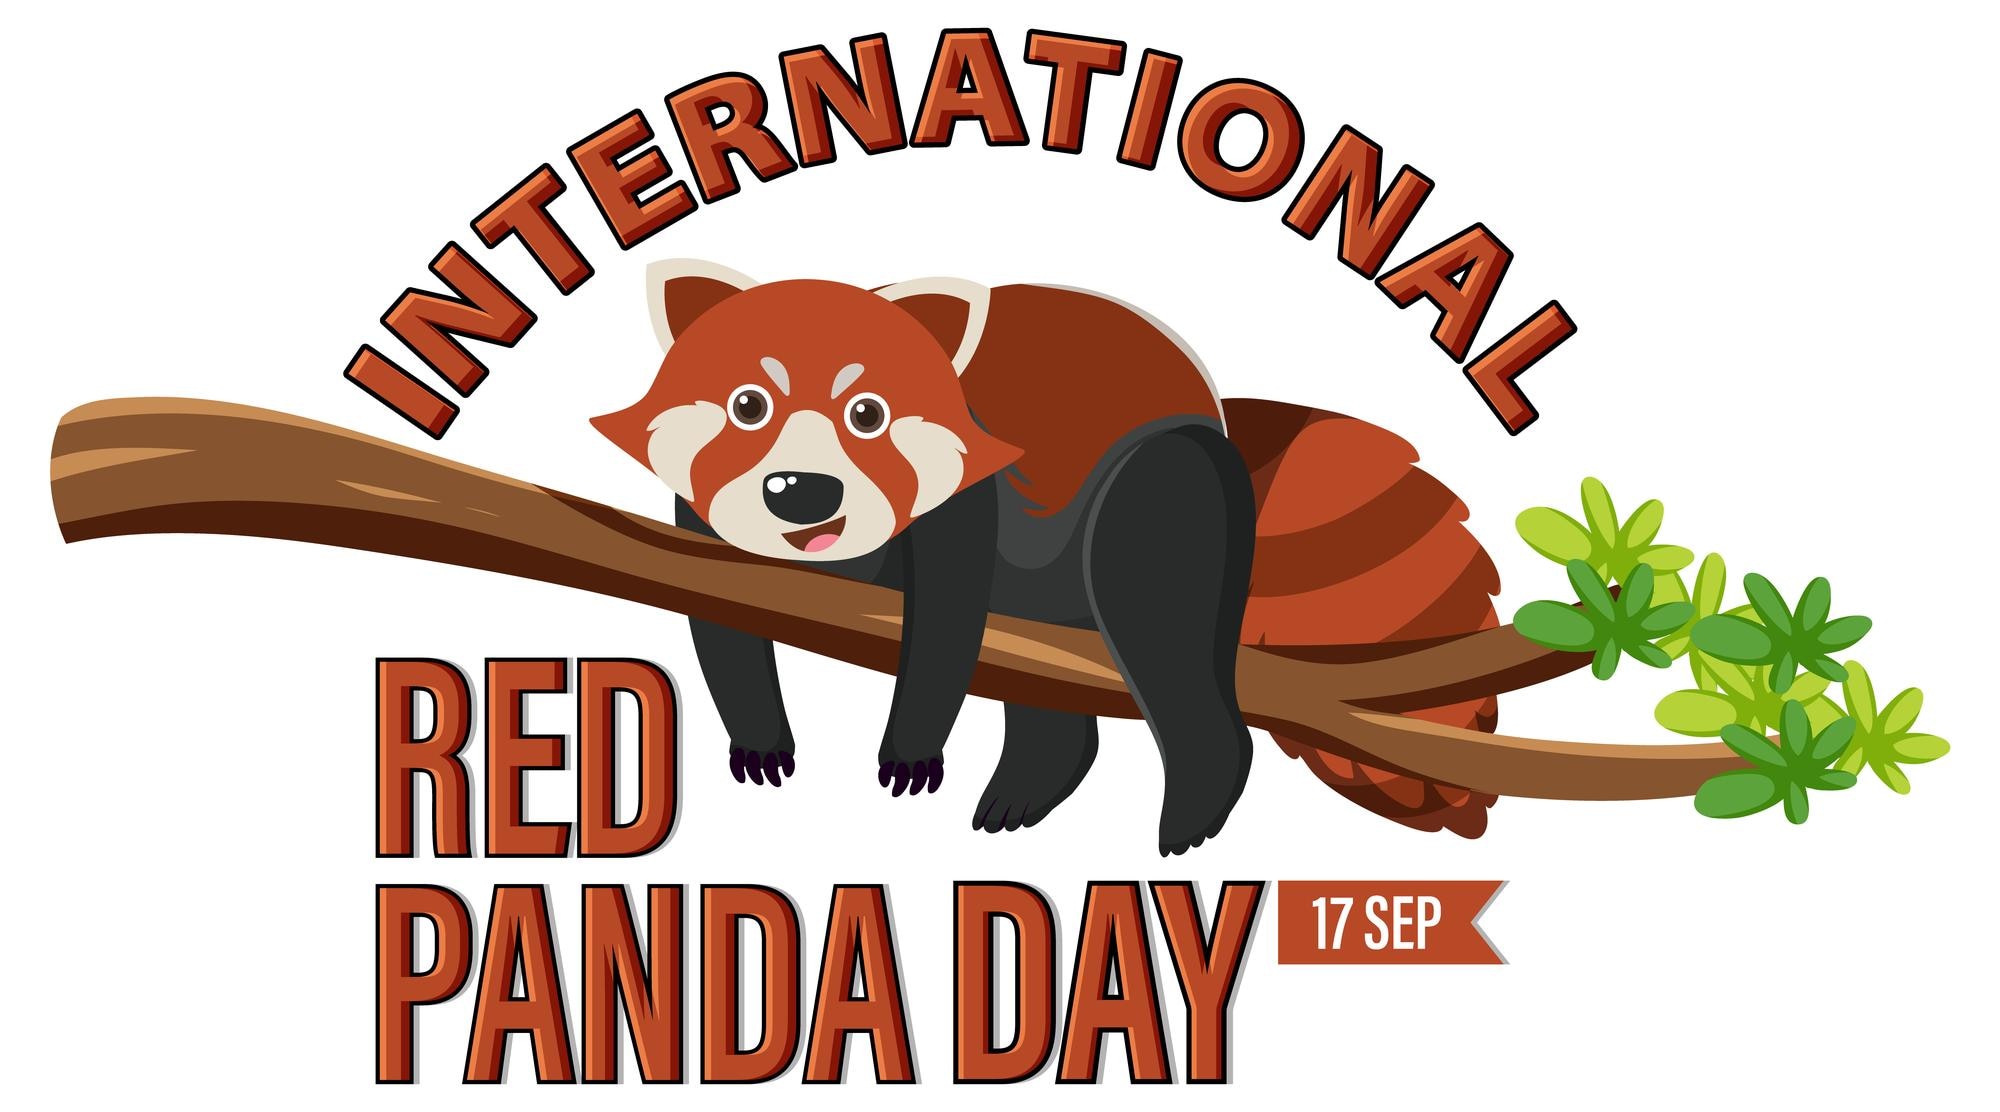 International Red Panda Day